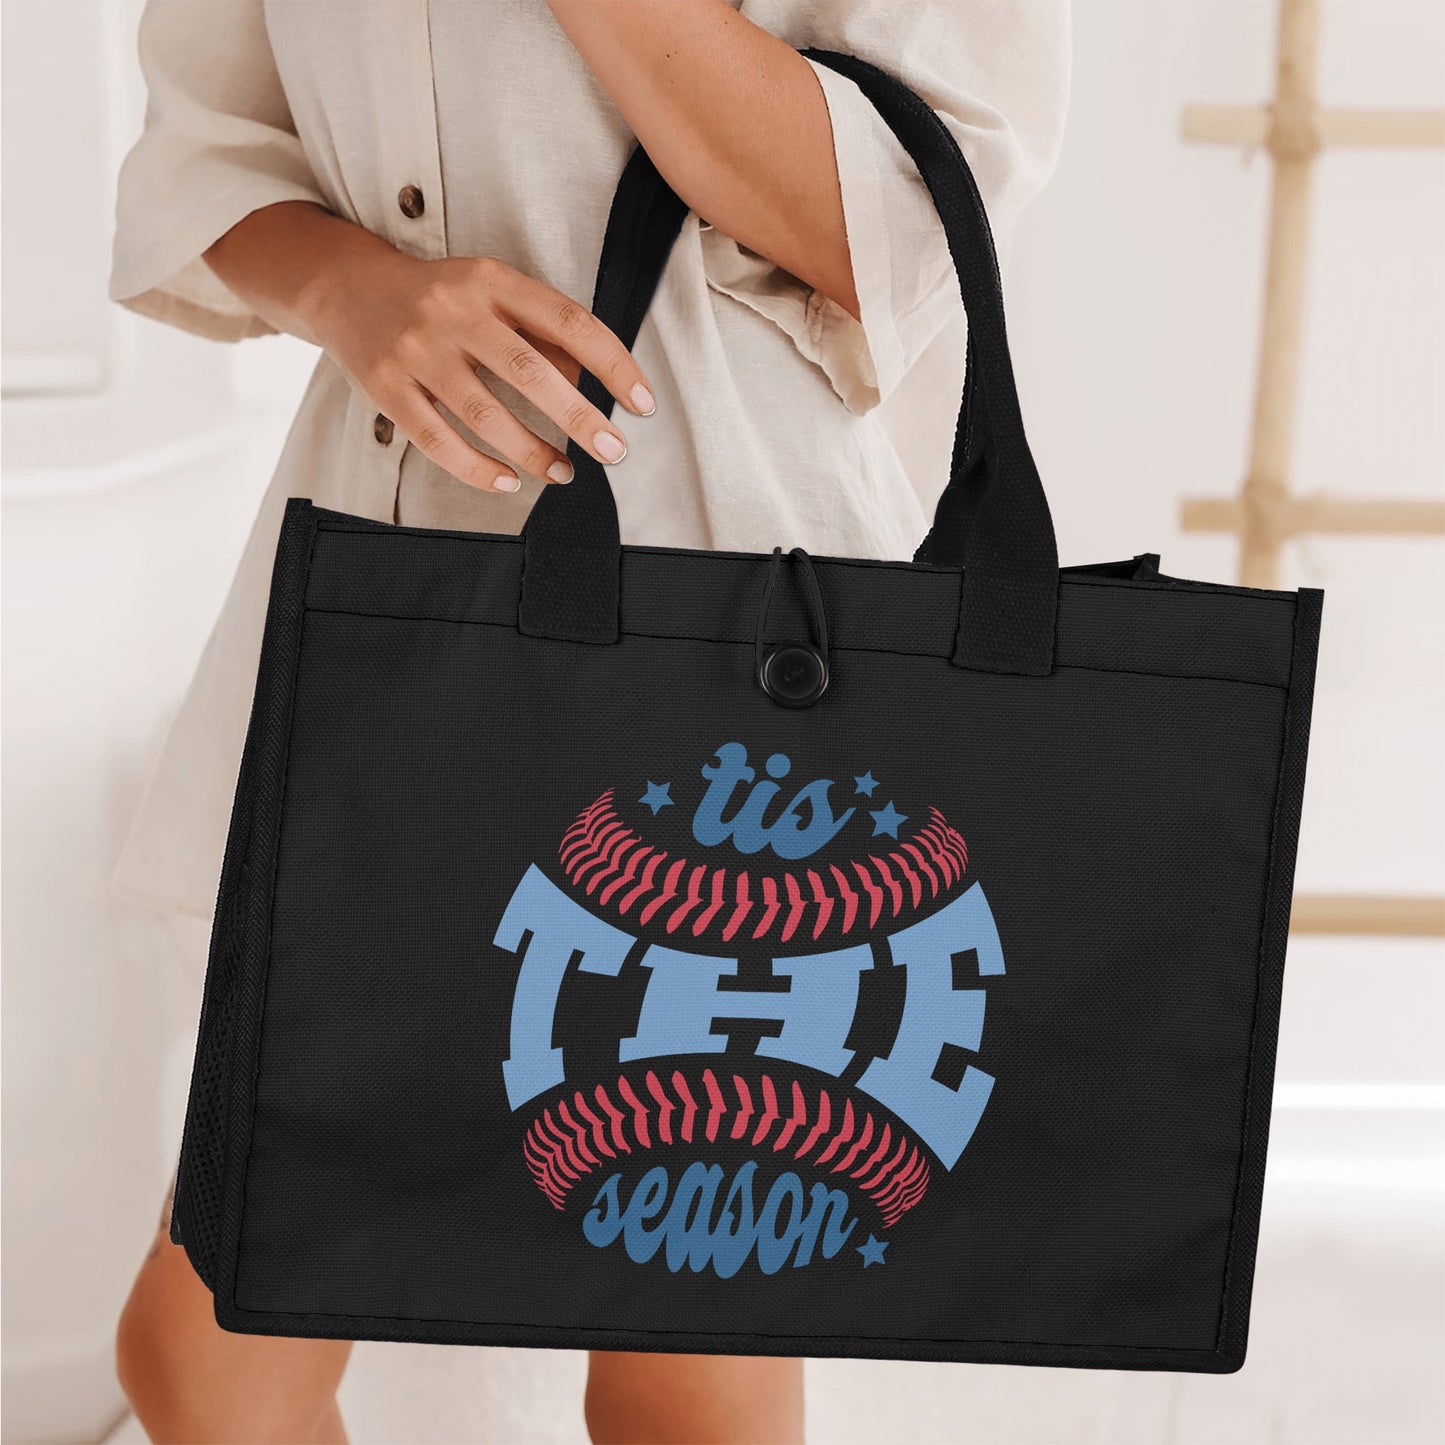 This is The Season Baseball Sports Canvas Tote Bag - EvoFash 